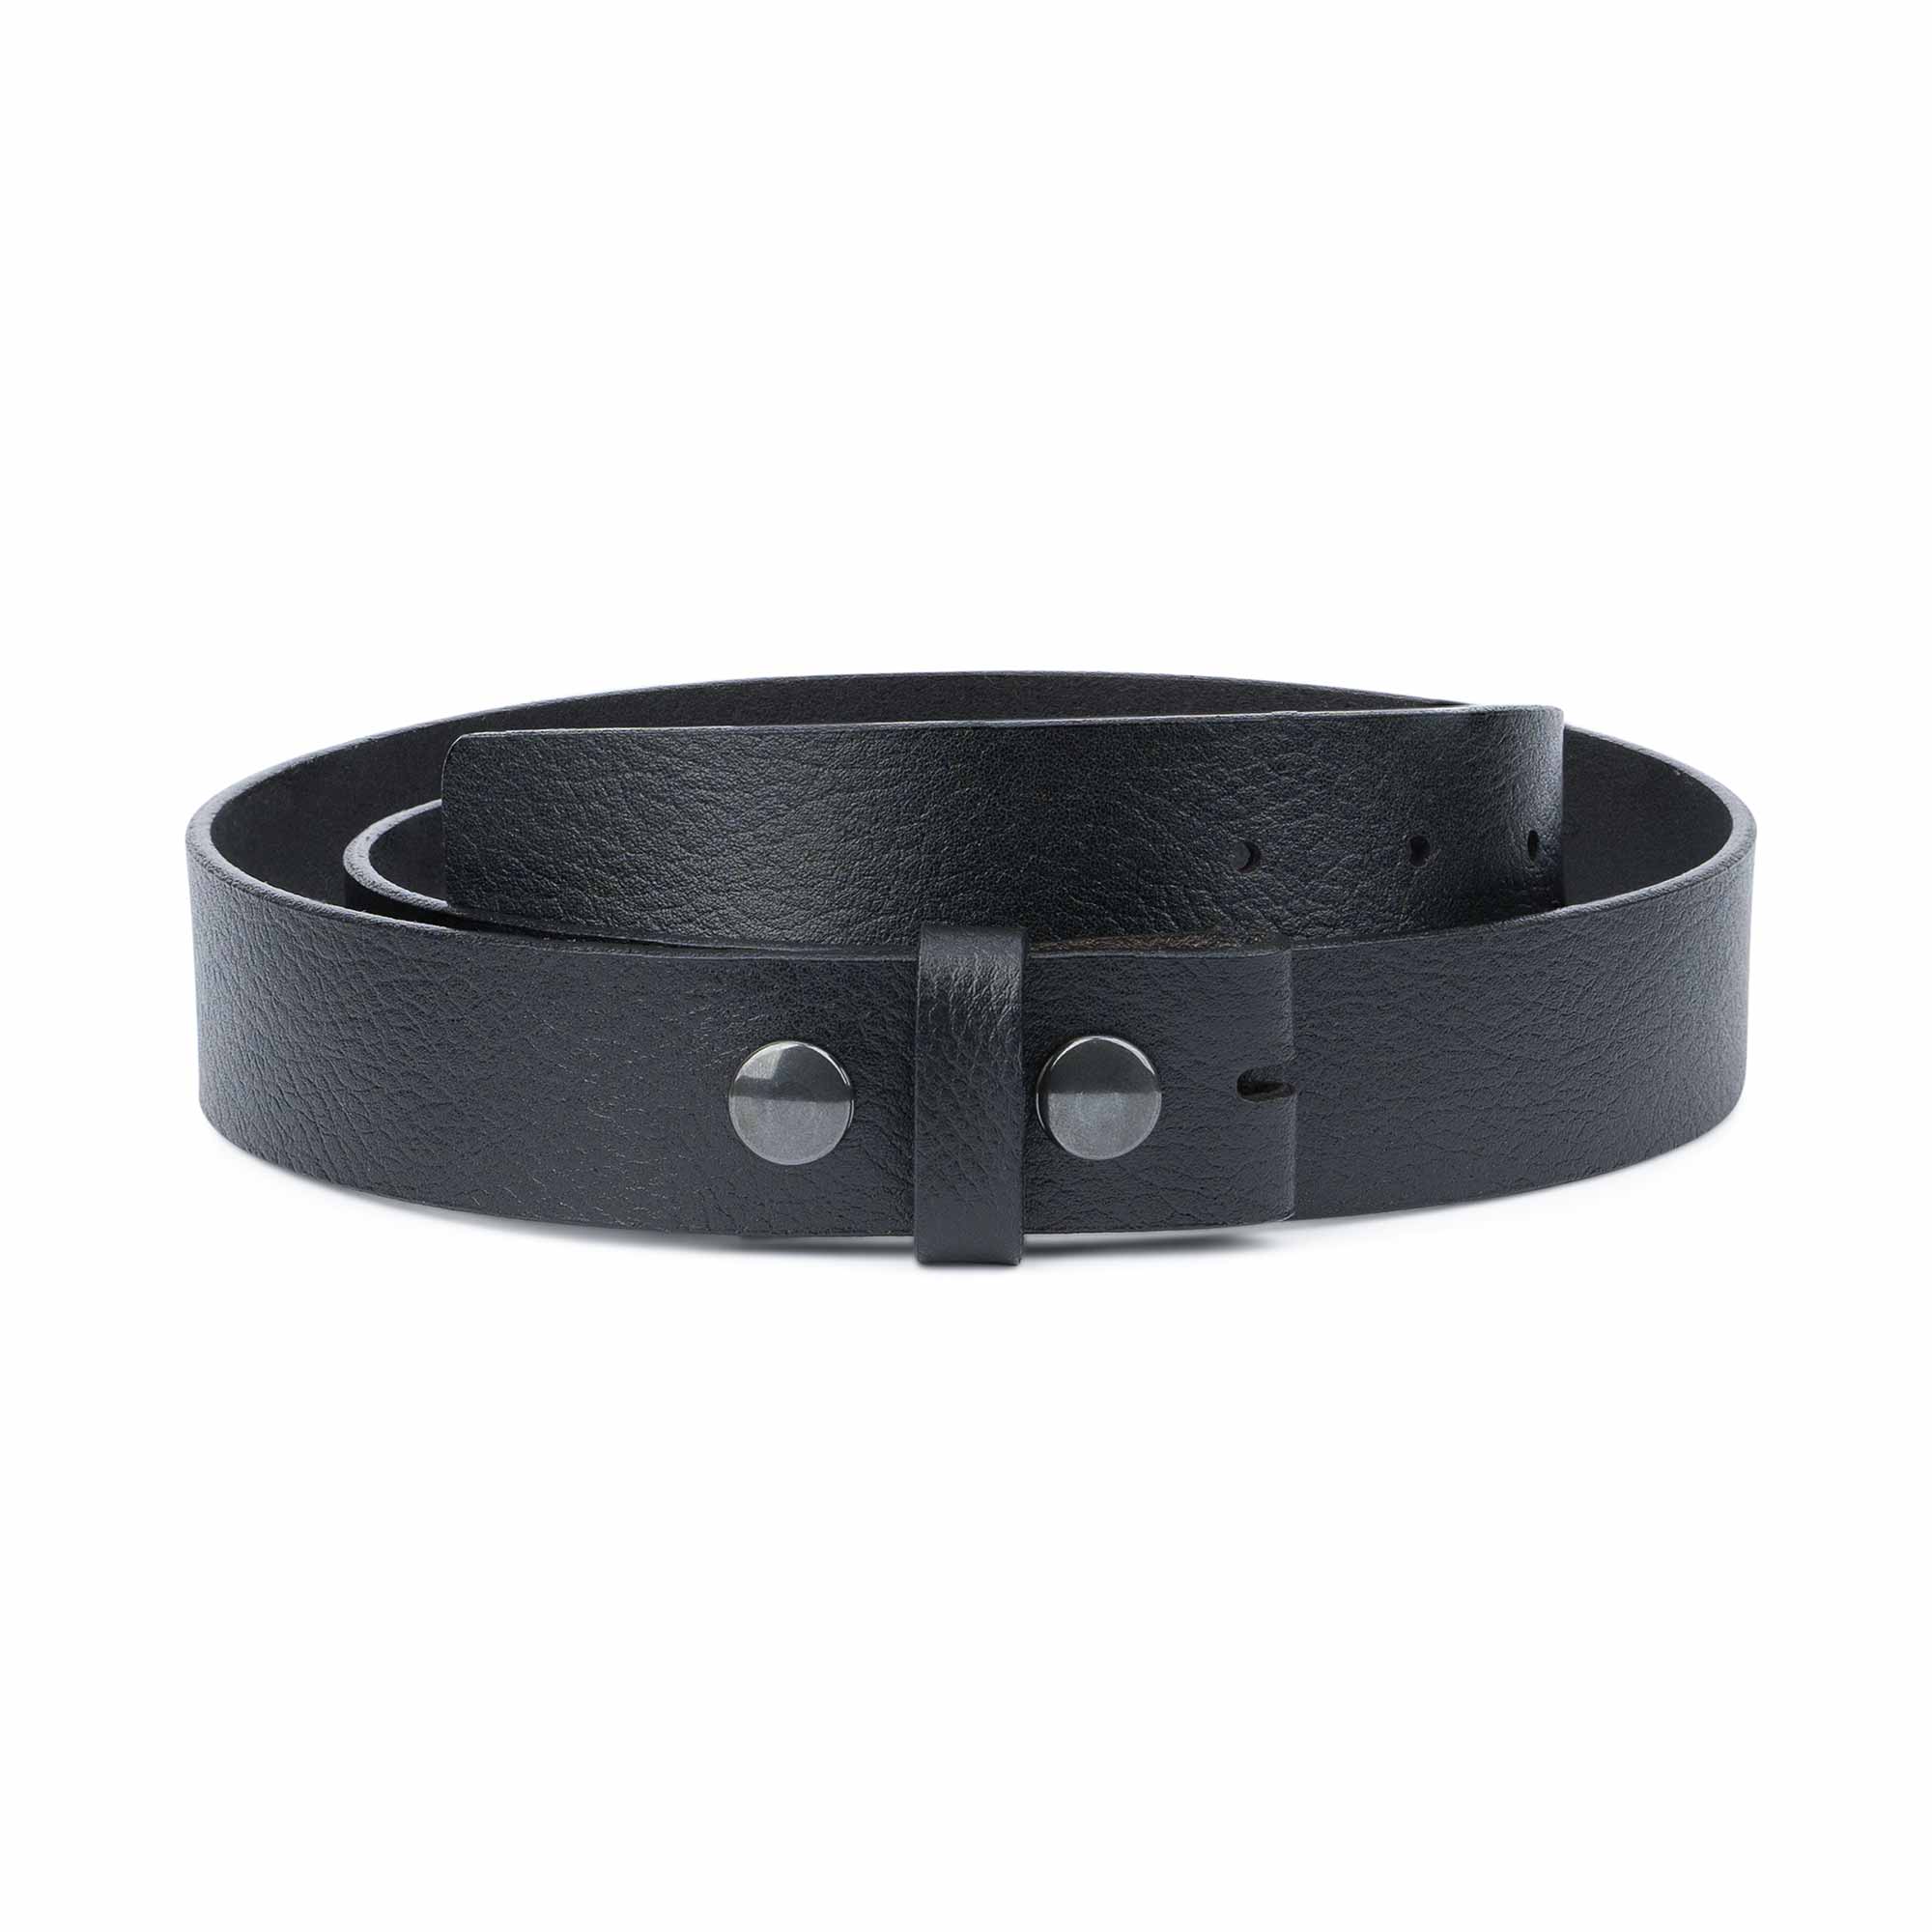 Black leather belts Without buckle Men's belt strap Snap on Real ...